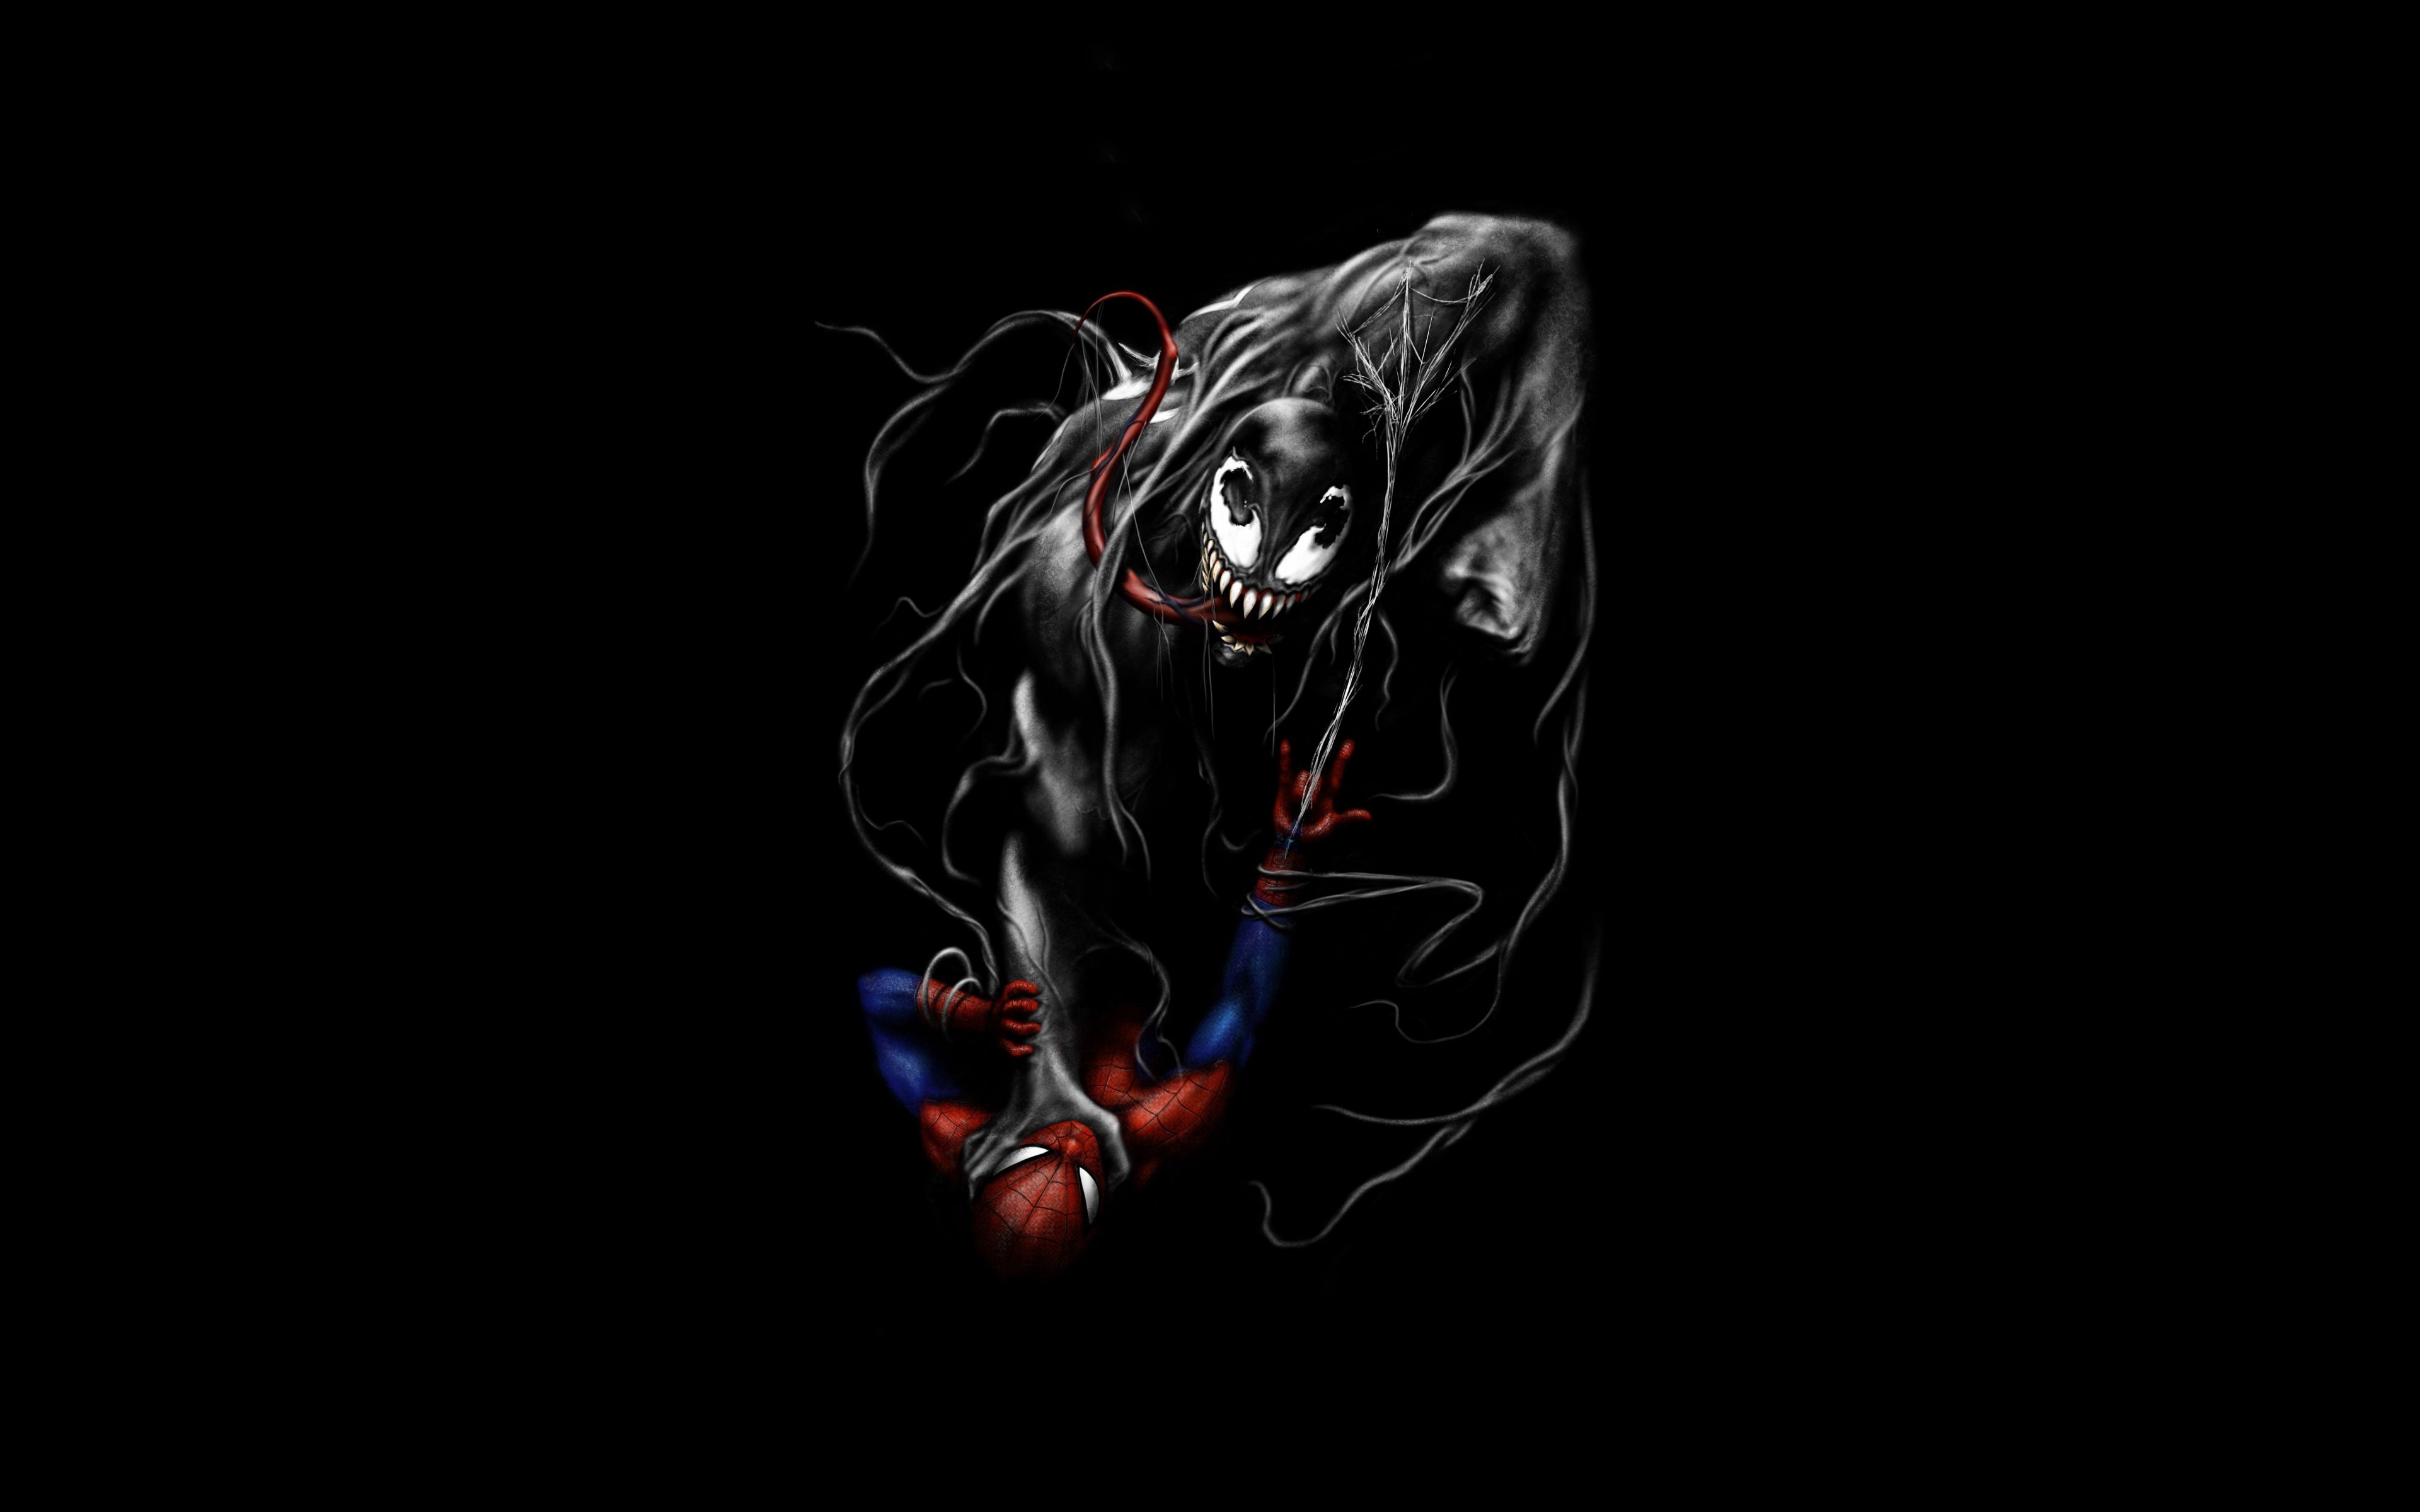 Download 3840x2400 Wallpaper Venom And Spider Man, Fight, Black